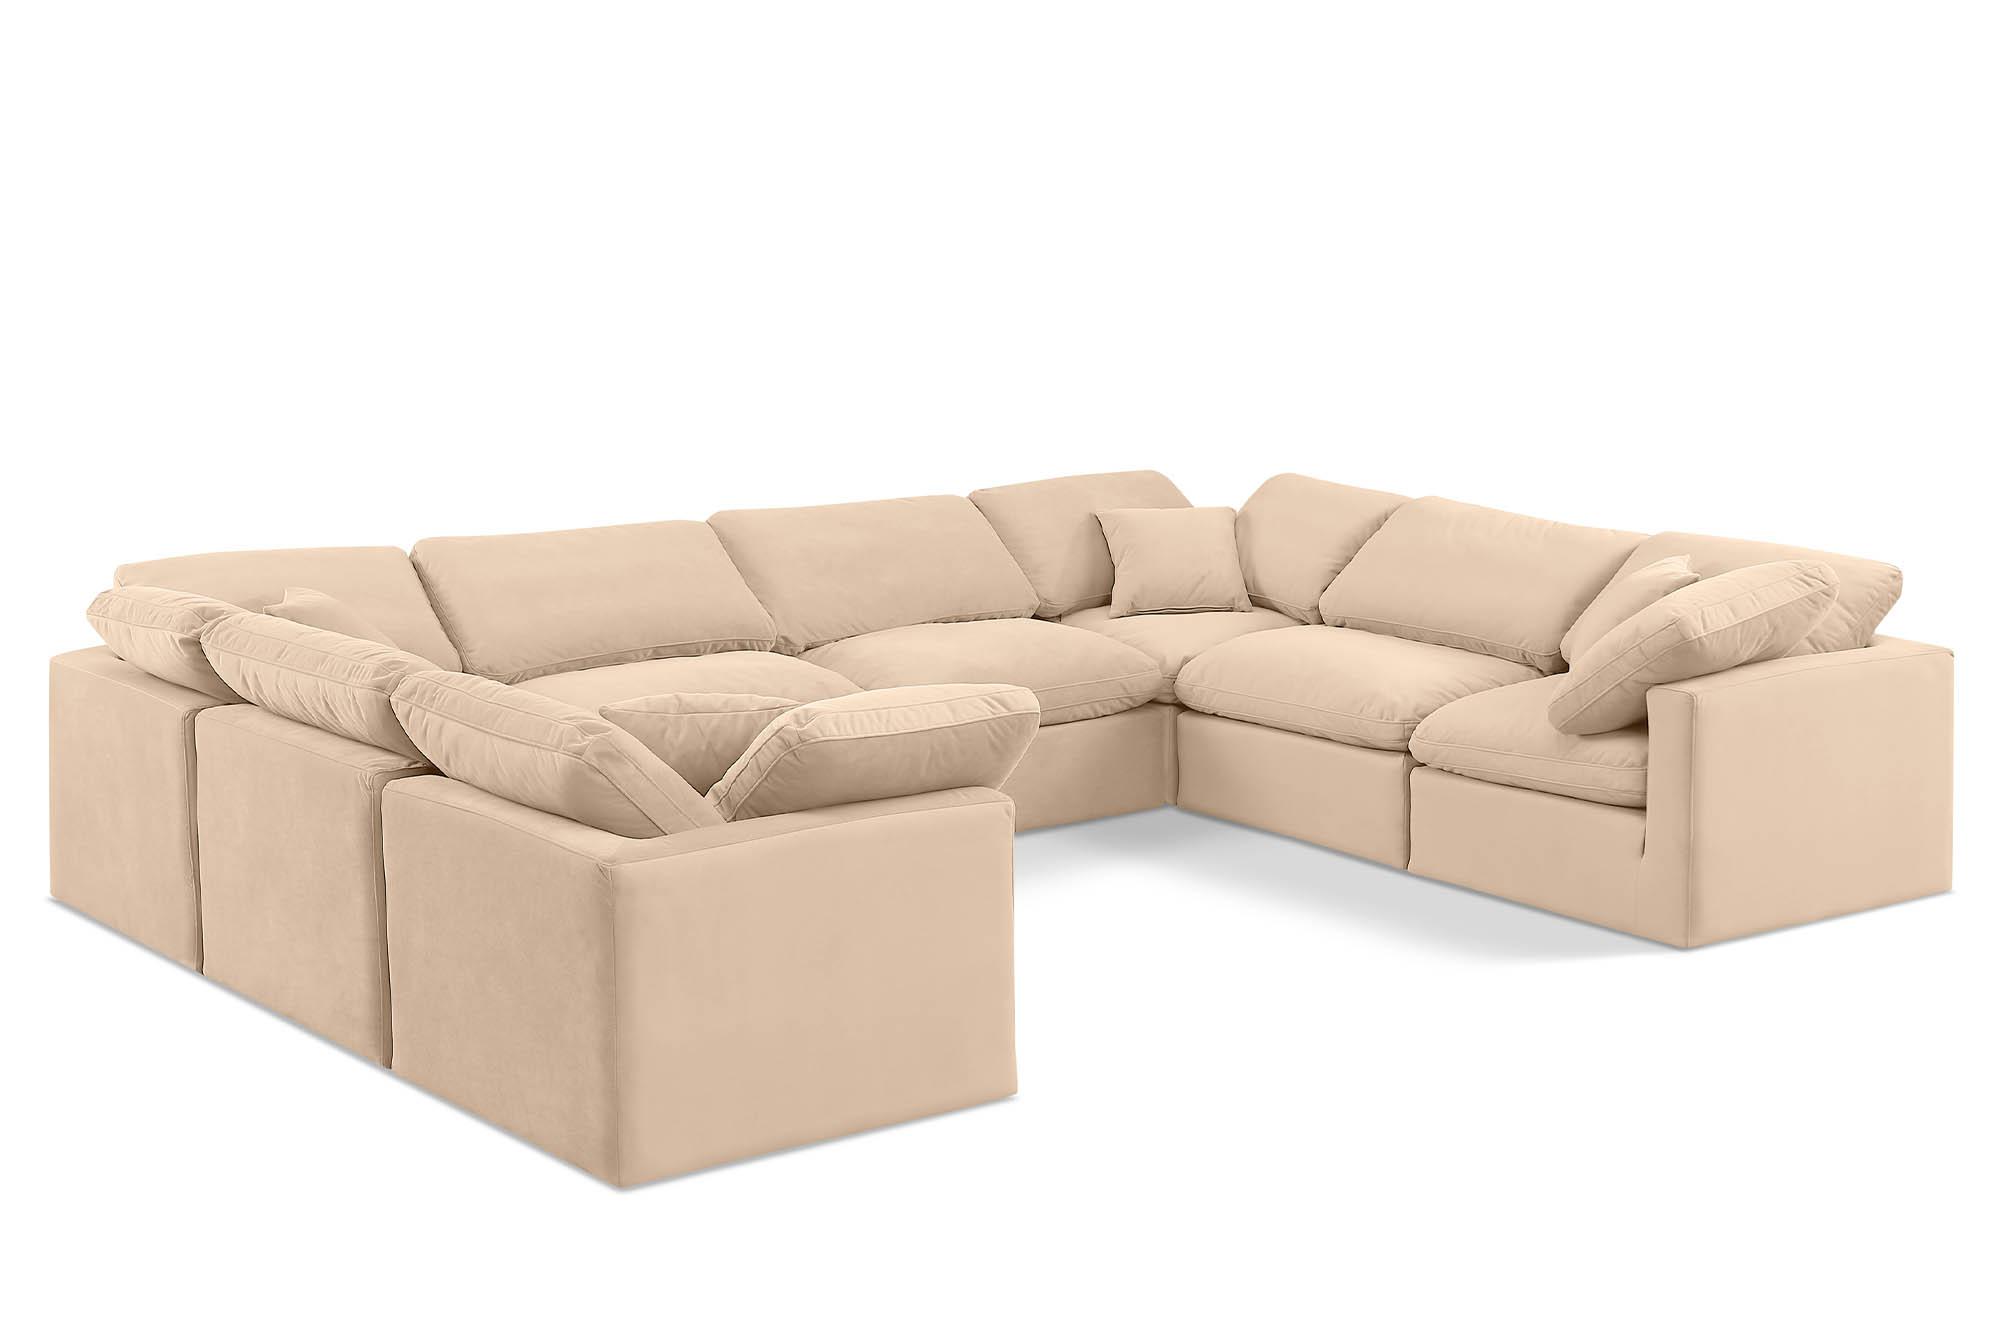 Contemporary, Modern Modular Sectional Sofa INDULGE 147Beige-Sec8A 147Beige-Sec8A in Beige Velvet